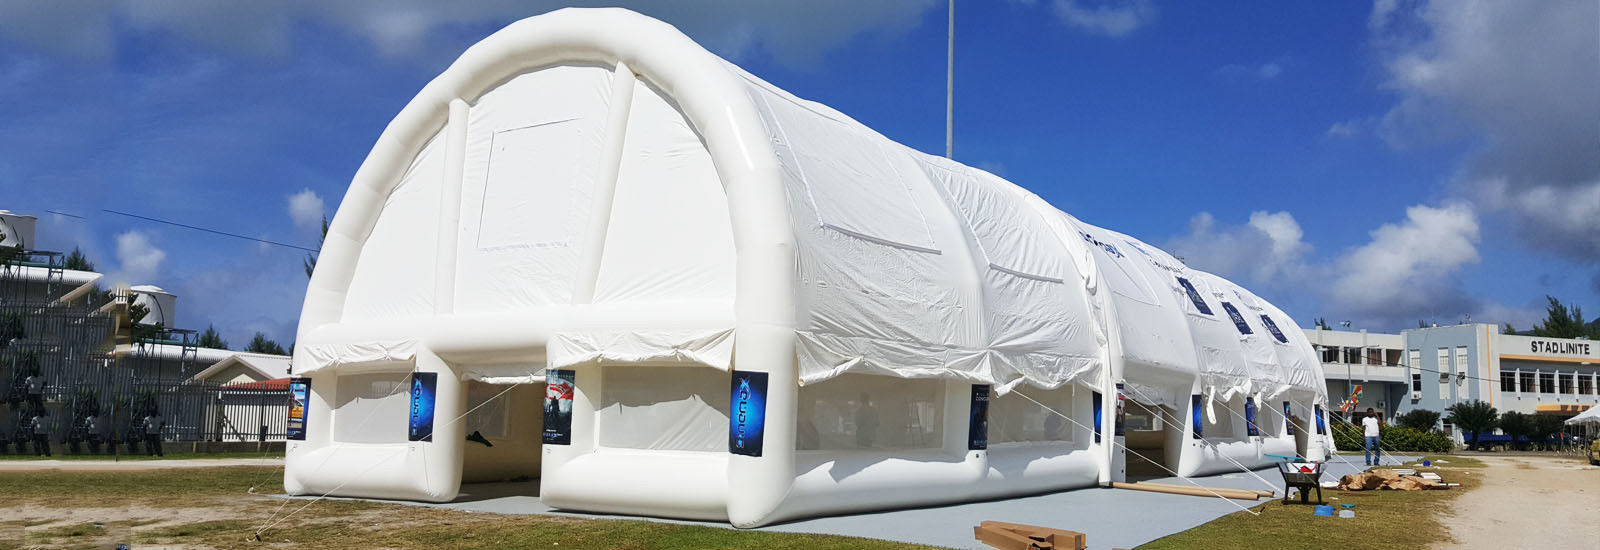 Inflatable घटना तम्बू